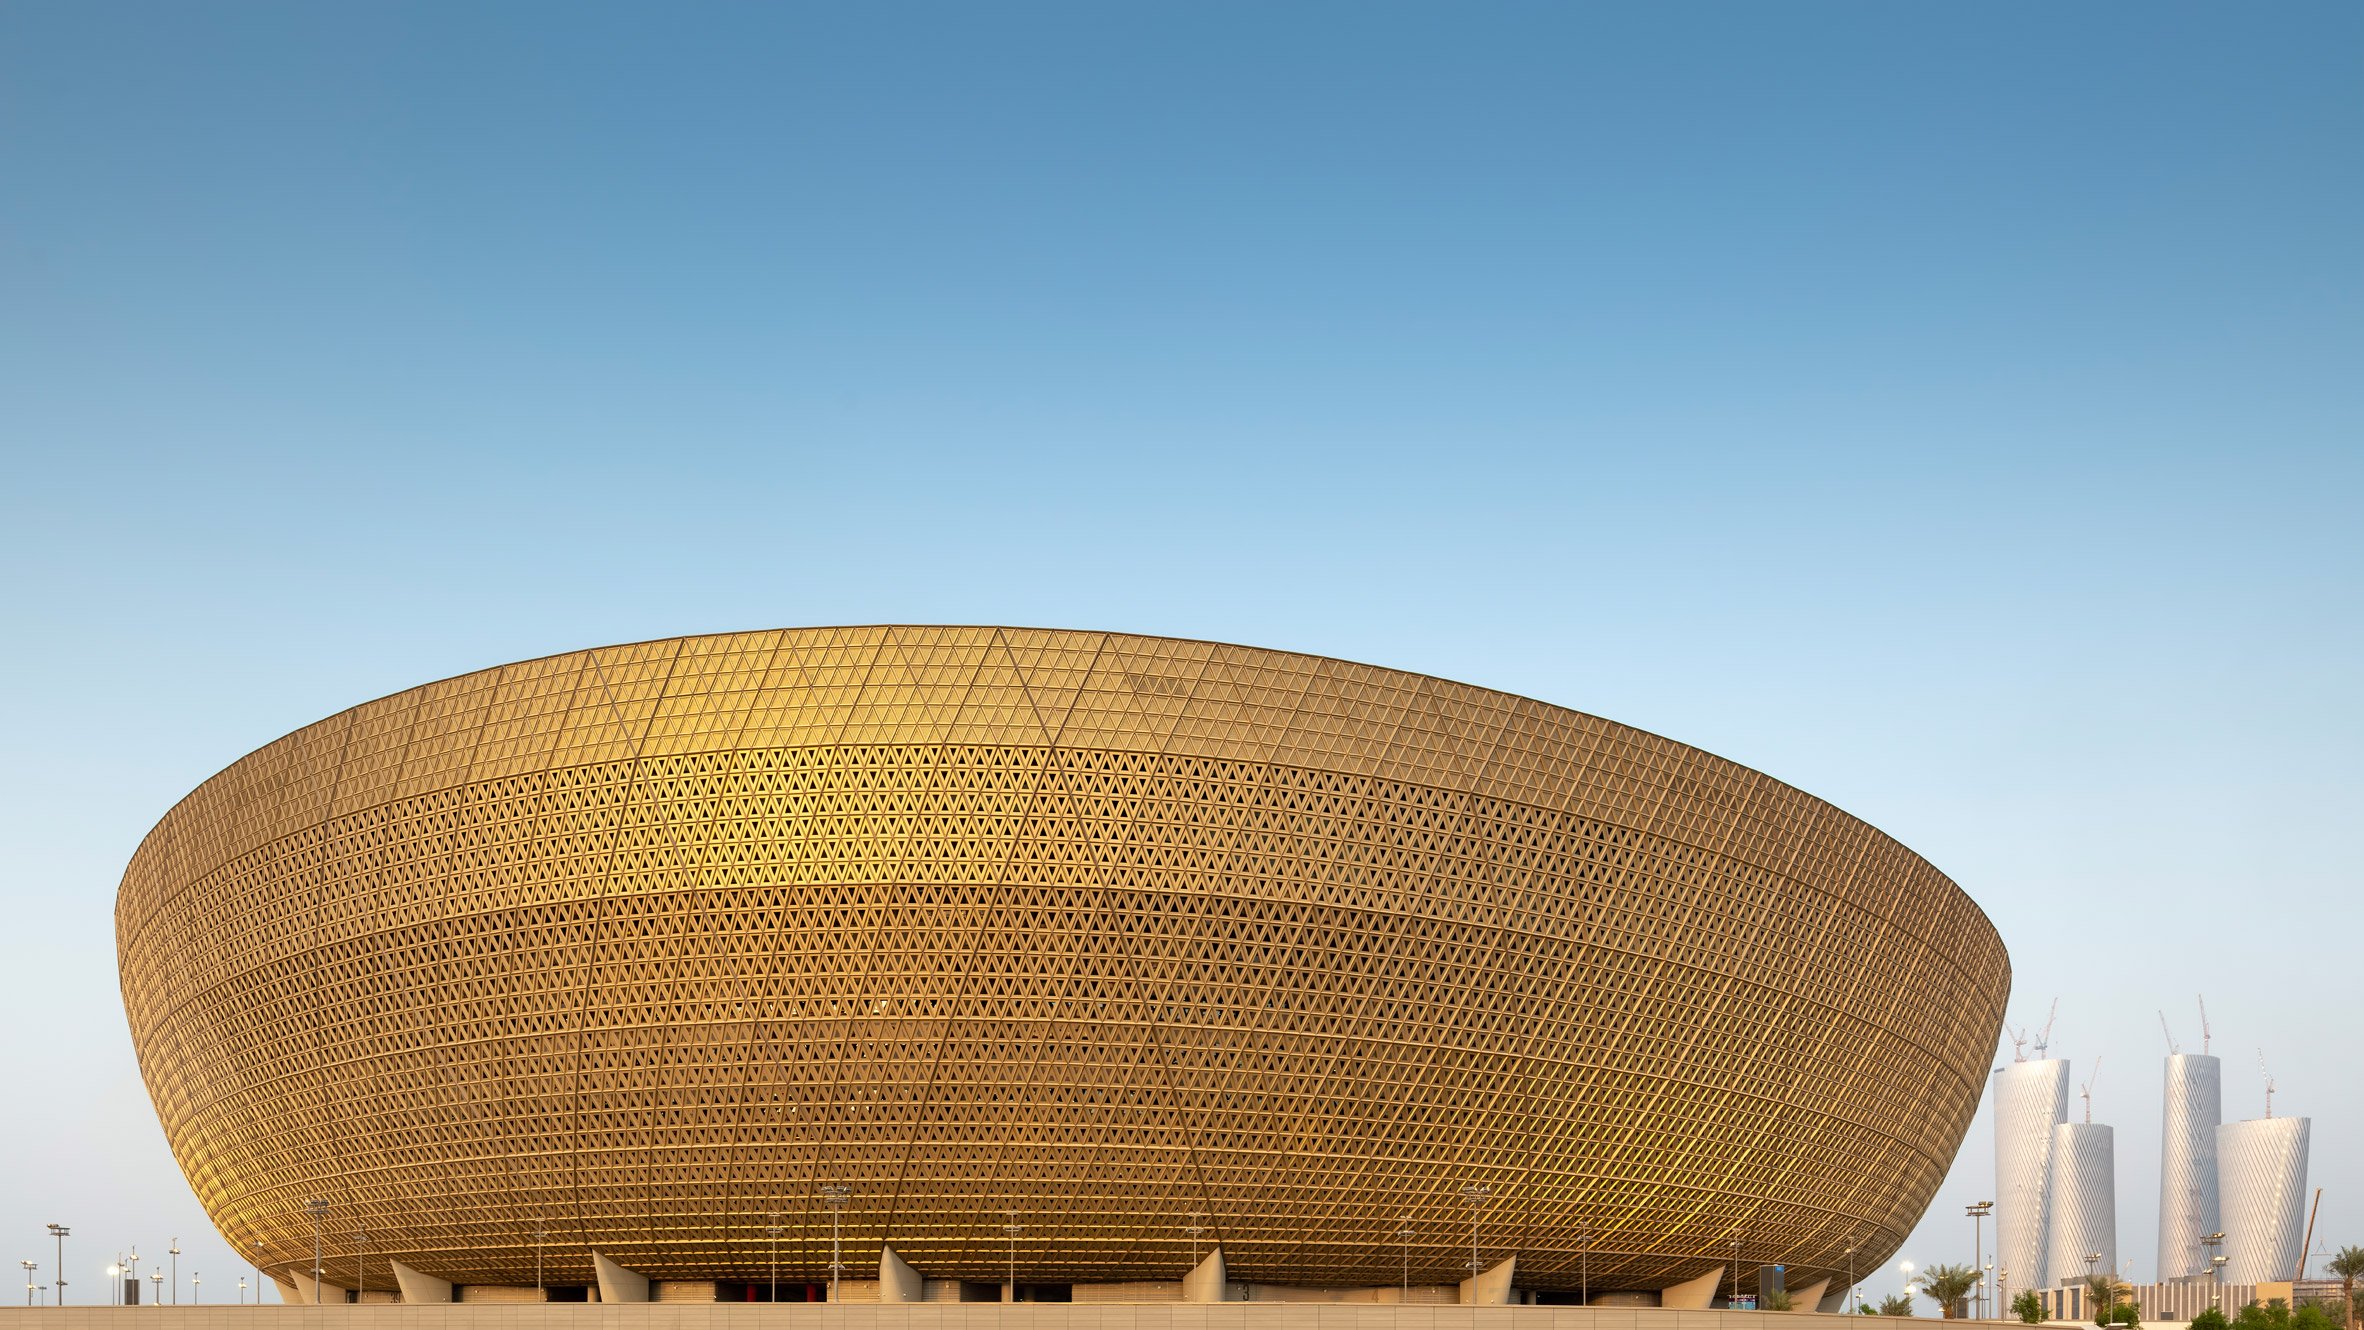 Golden stadium in Qatar